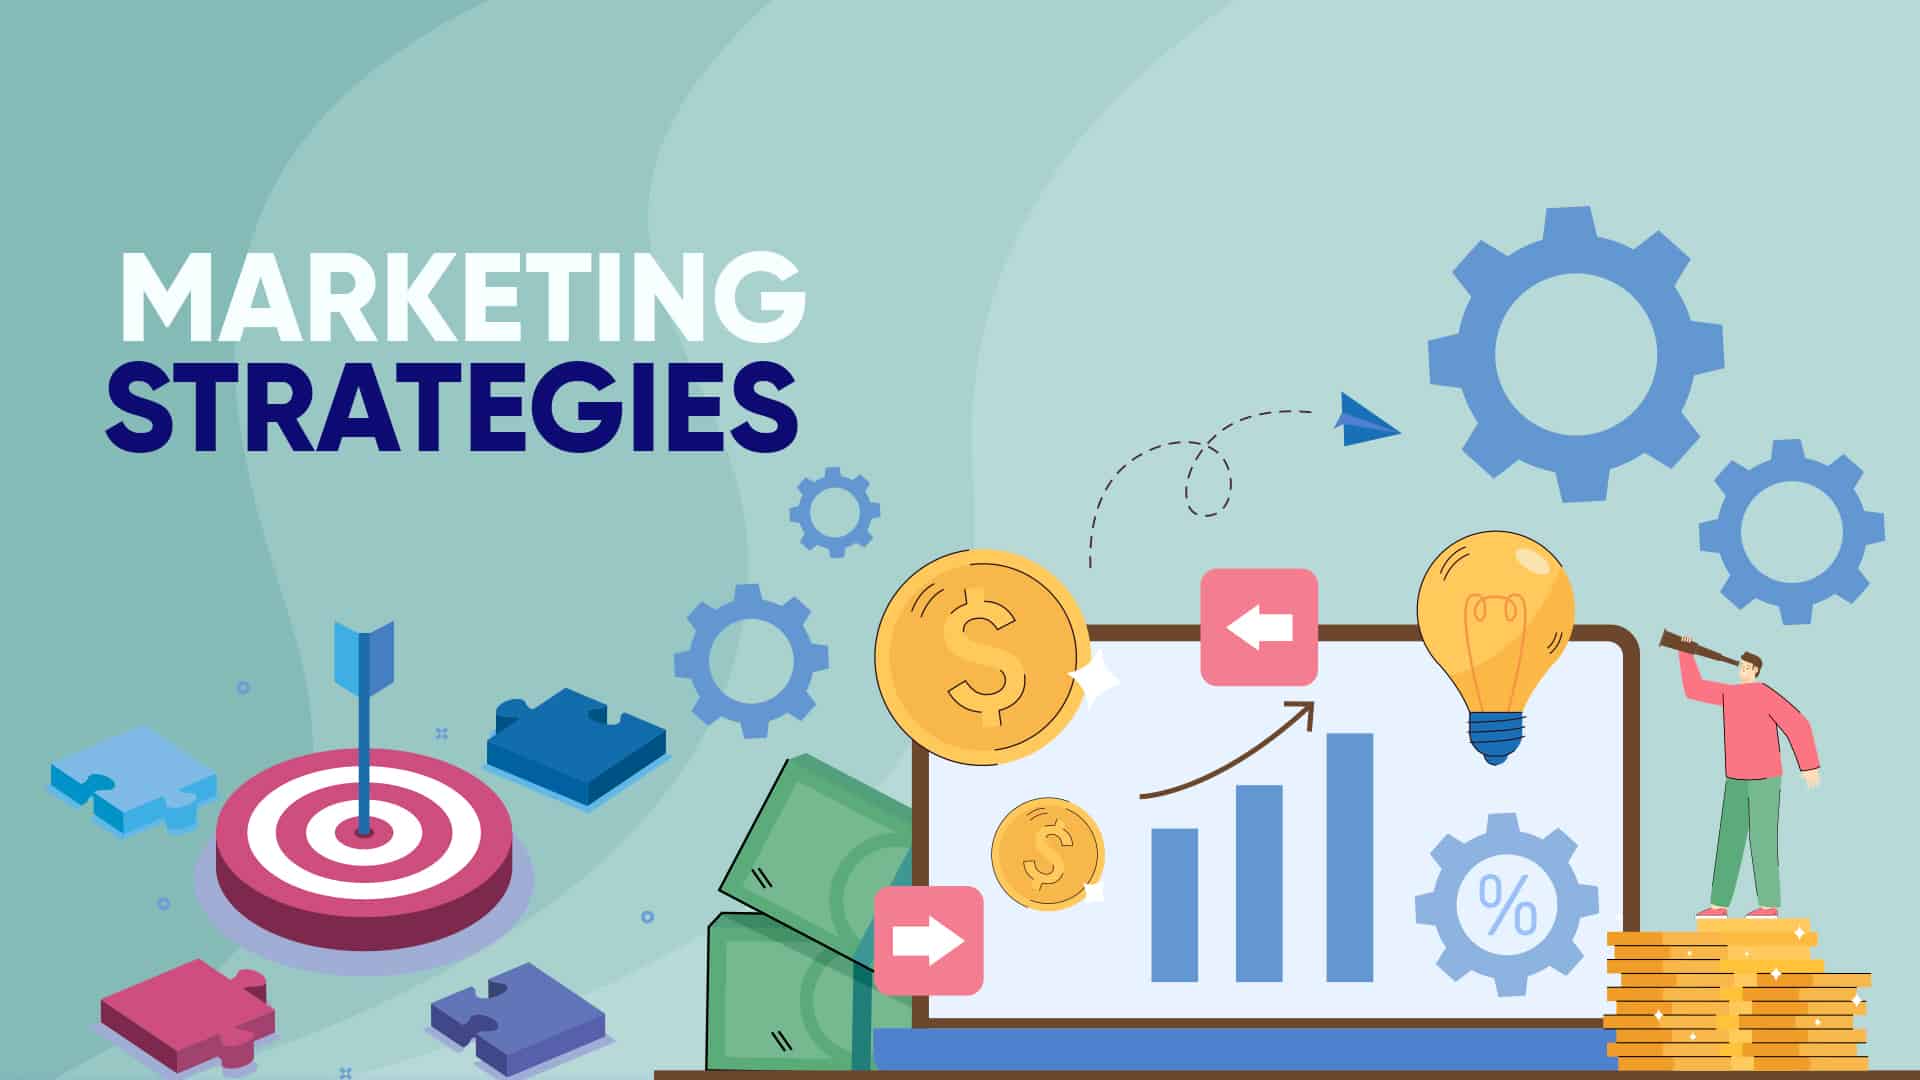 Digital Marketing Strategies for the Finance Industry